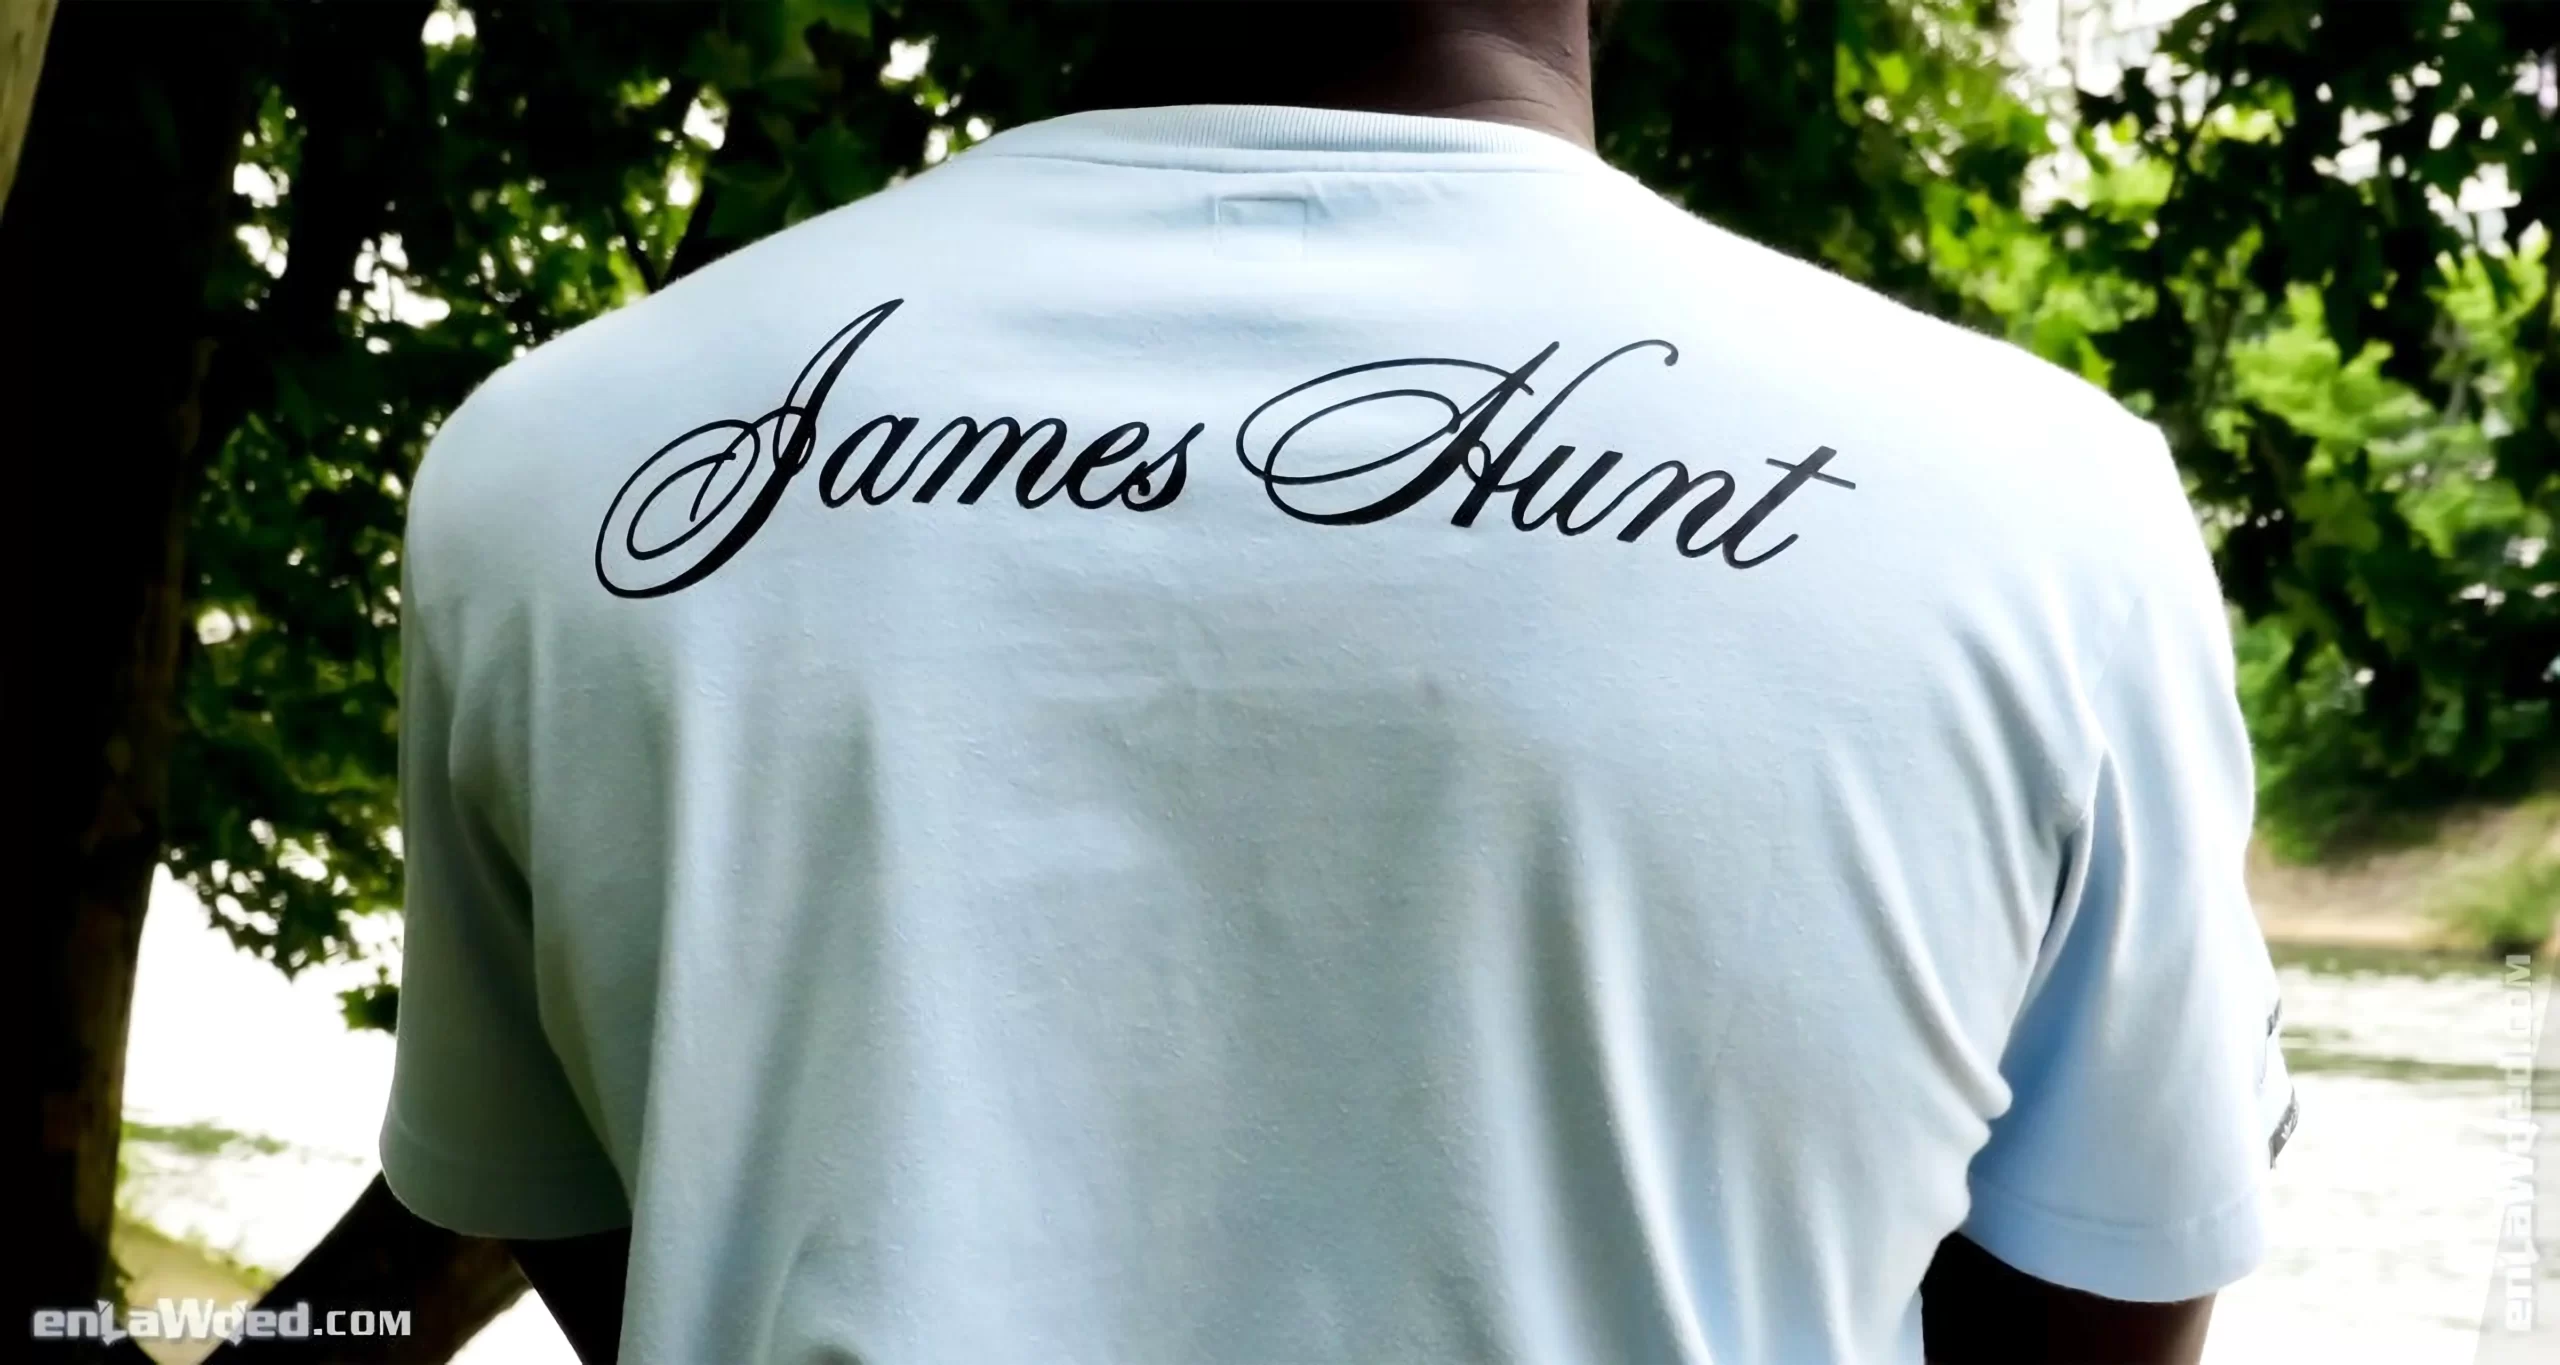 Men’s 2006 James Hunt Player’s Club T-Shirt by Adidas: Frisky (EnLawded.com file #lmchk90317ip2y125022kg9st)